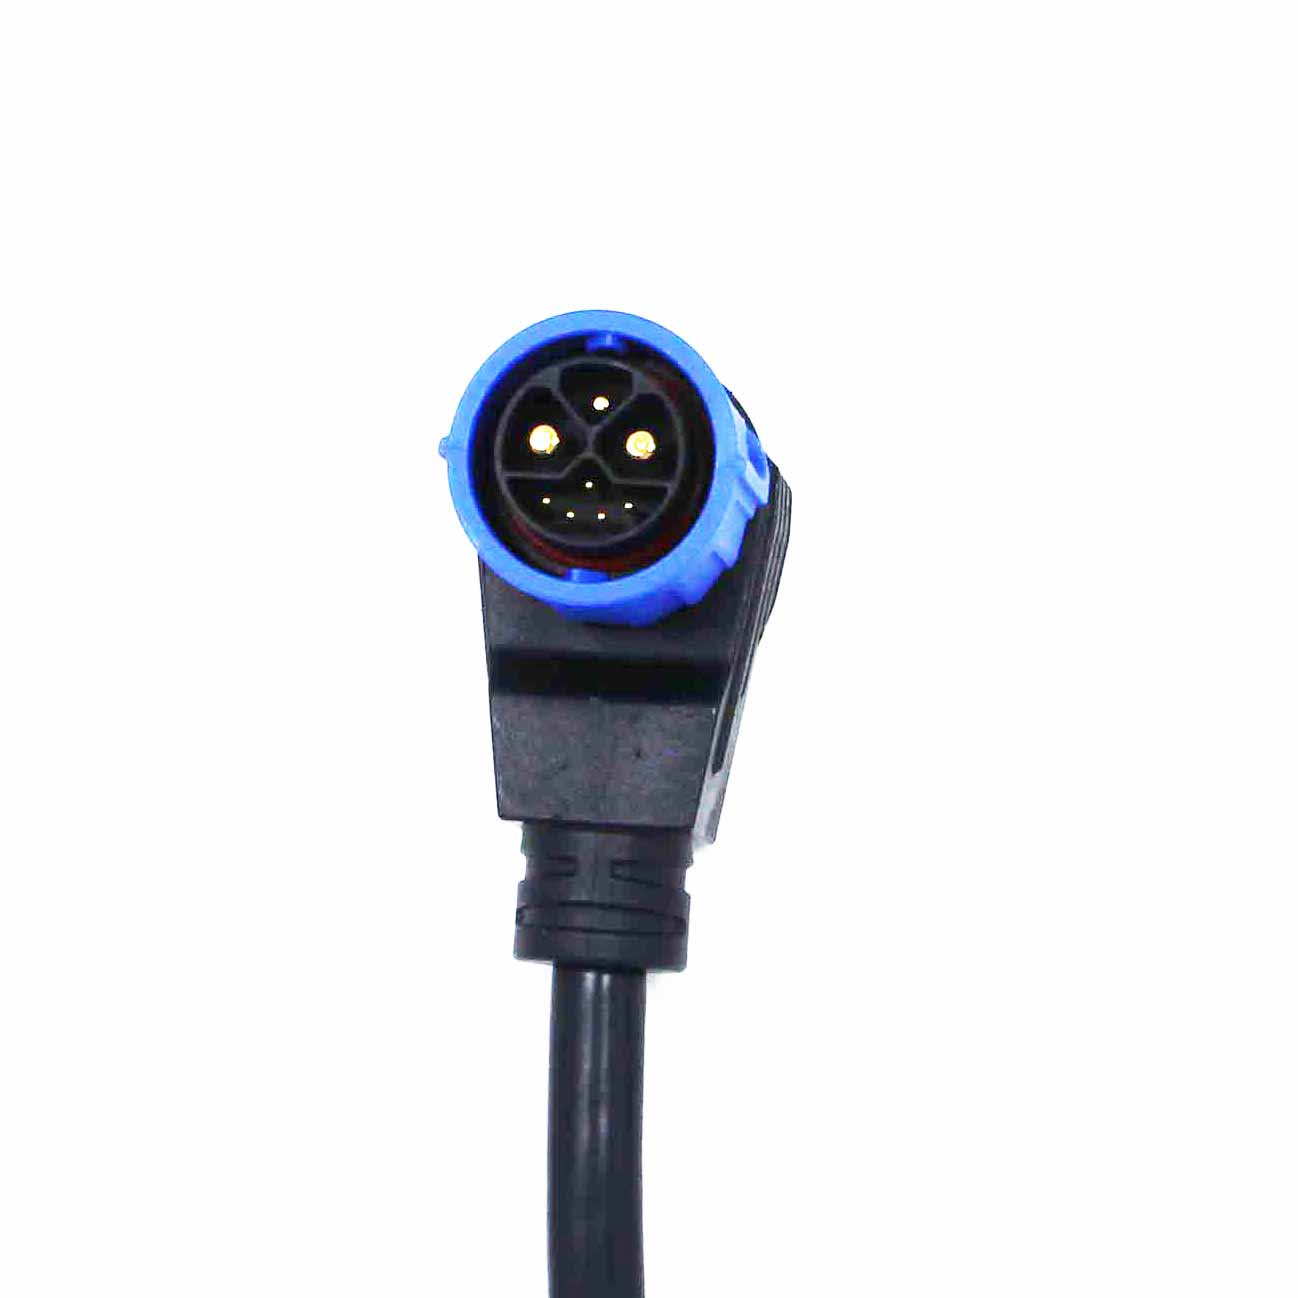 E-bike Powerstroke wires|auto lock plug|replaceable fuse-B0200626